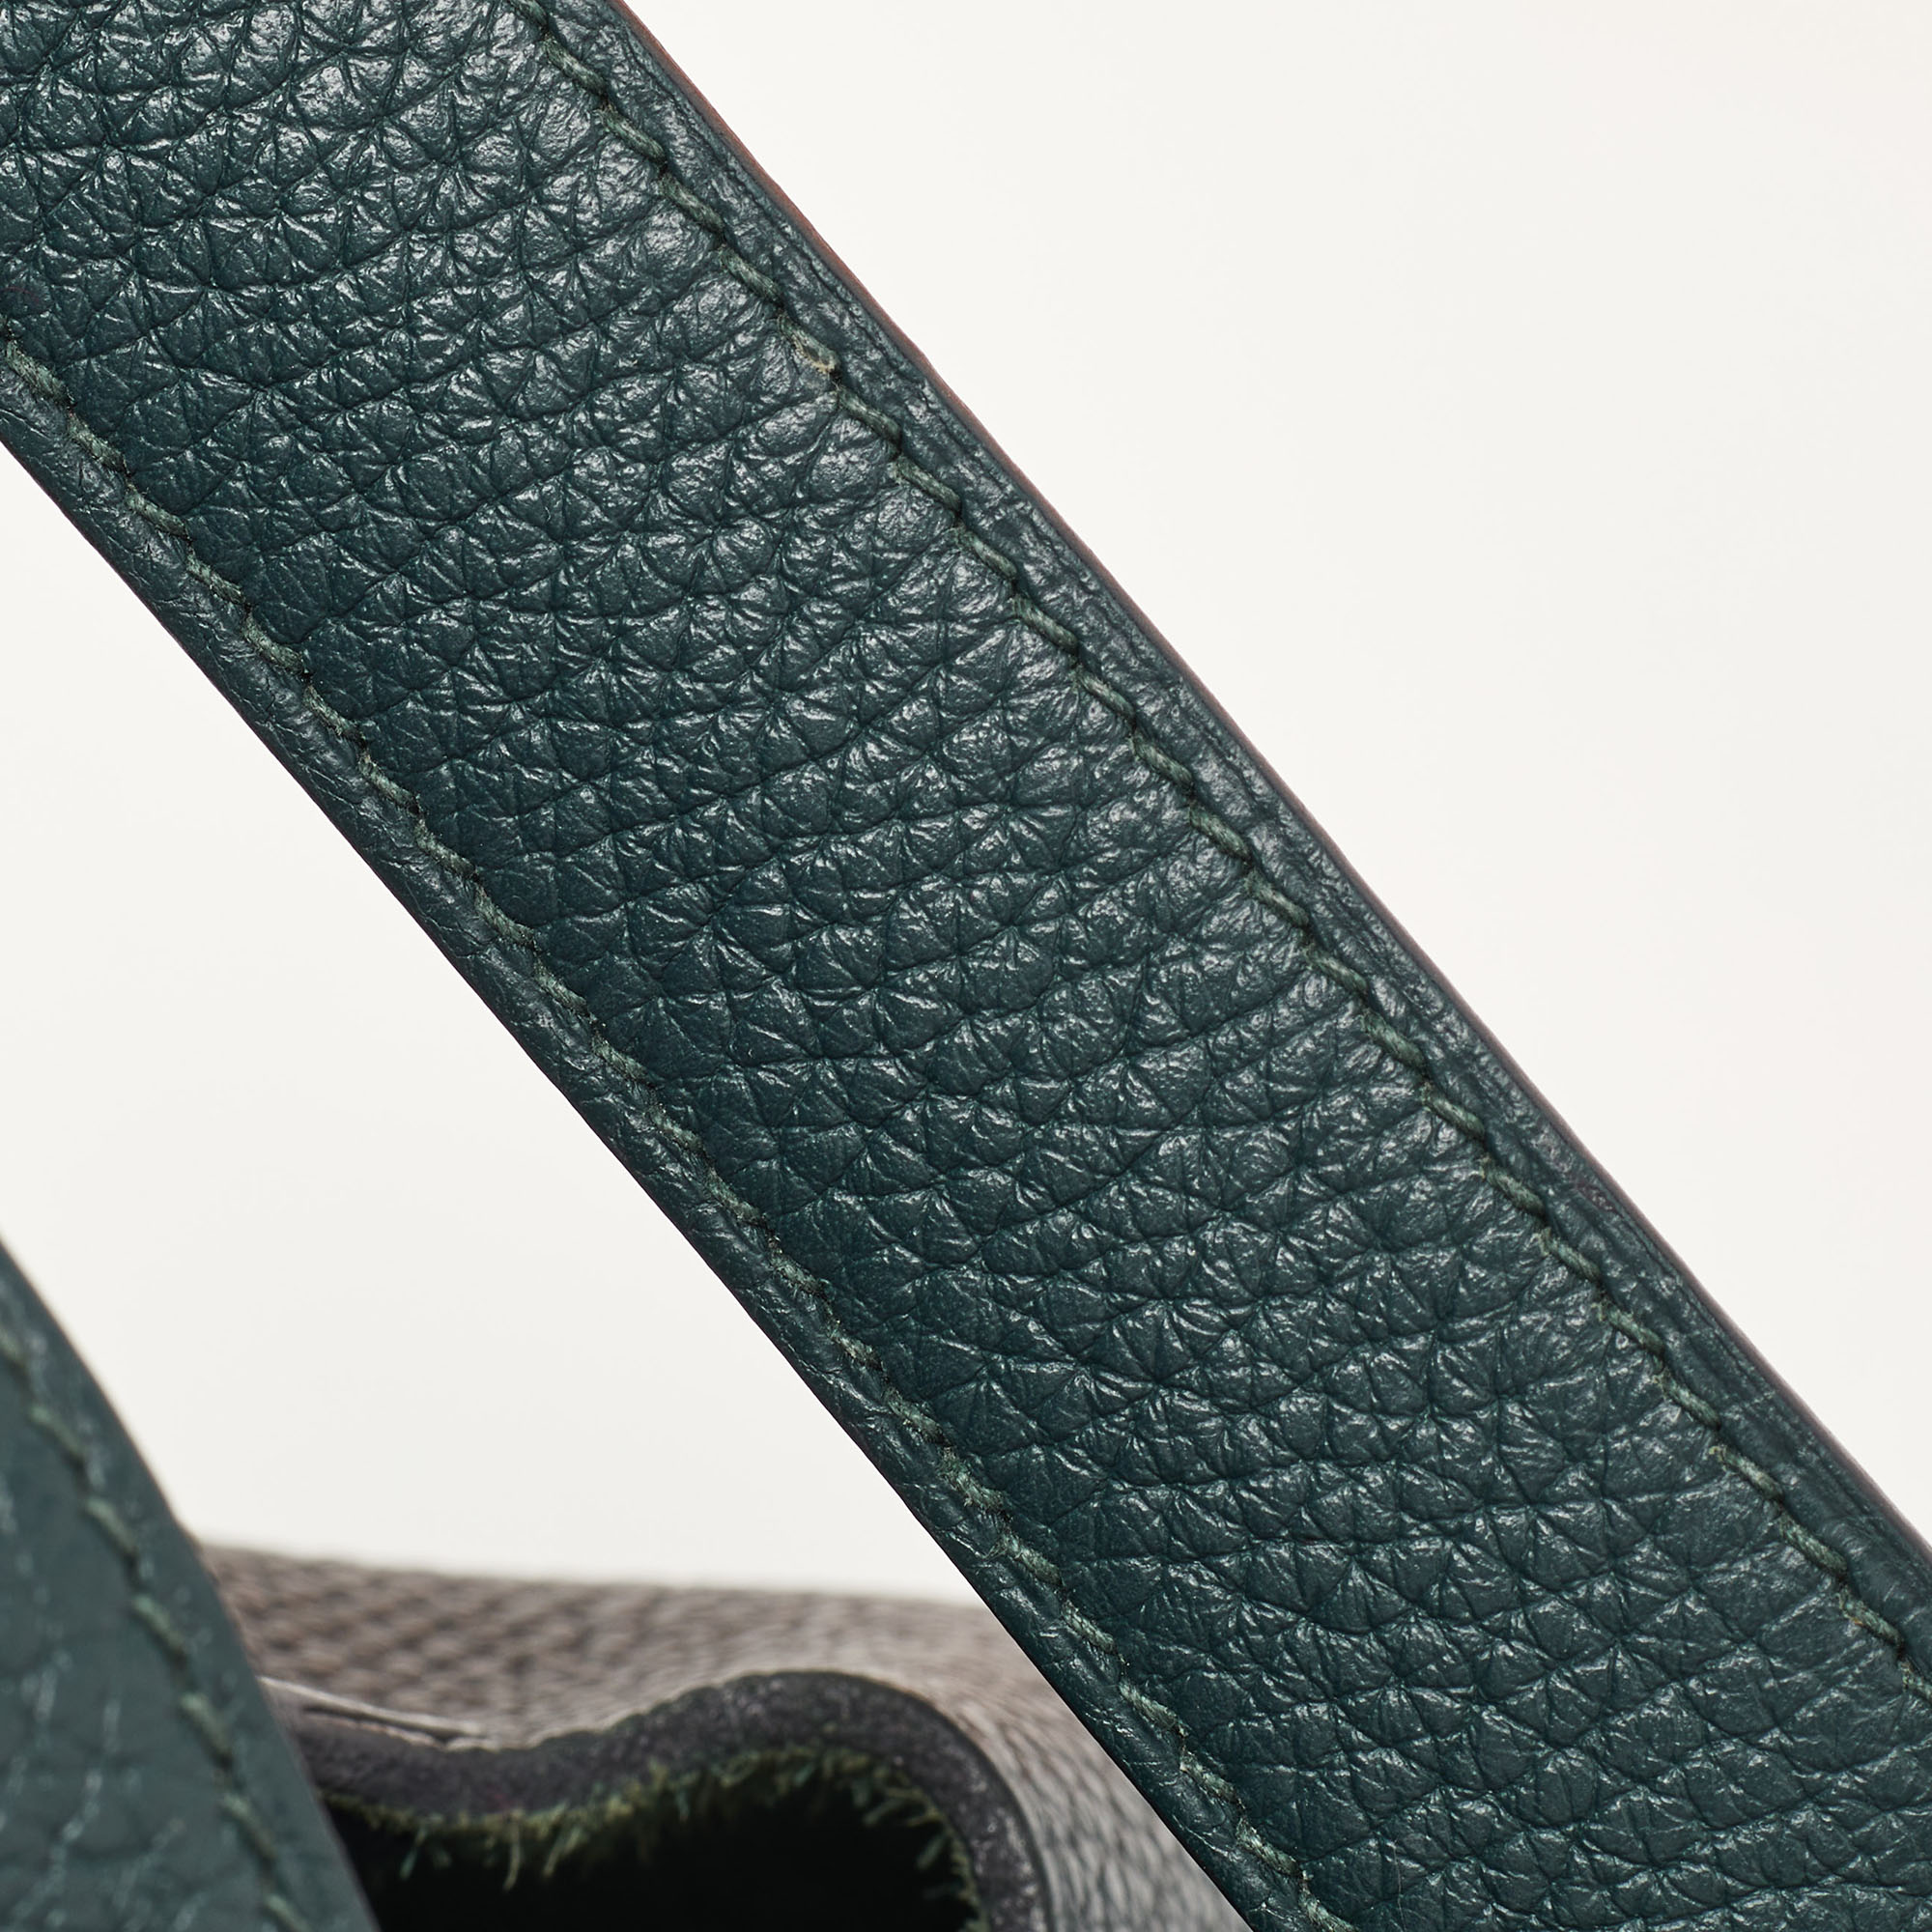 Hermes Vert Cypress Taurillon Clemence Leather Picotin Lock 18 Bag